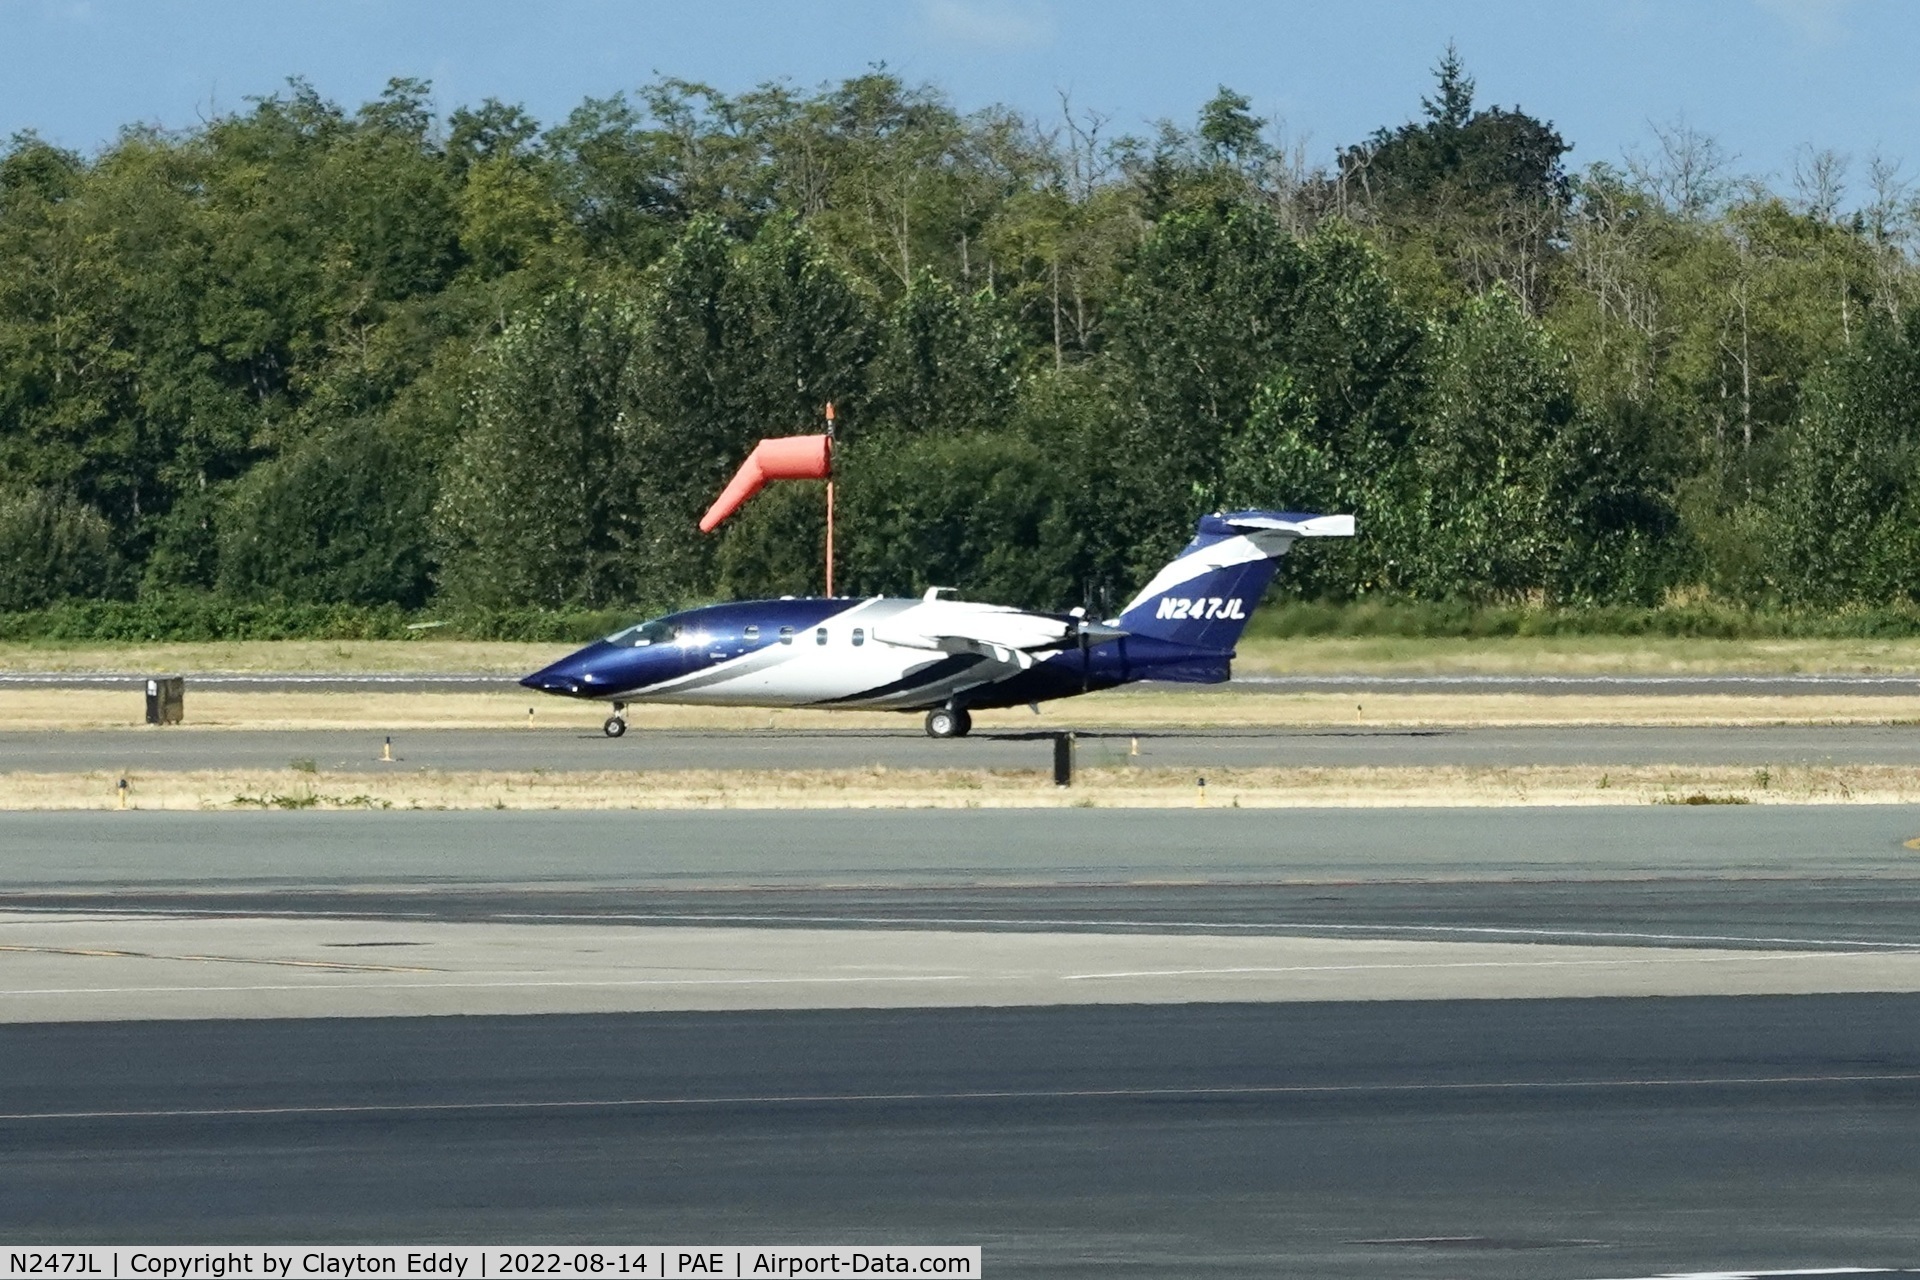 N247JL, 2010 Piaggio P-180 Avanti II C/N 1207, Paine Field Washington 2022.